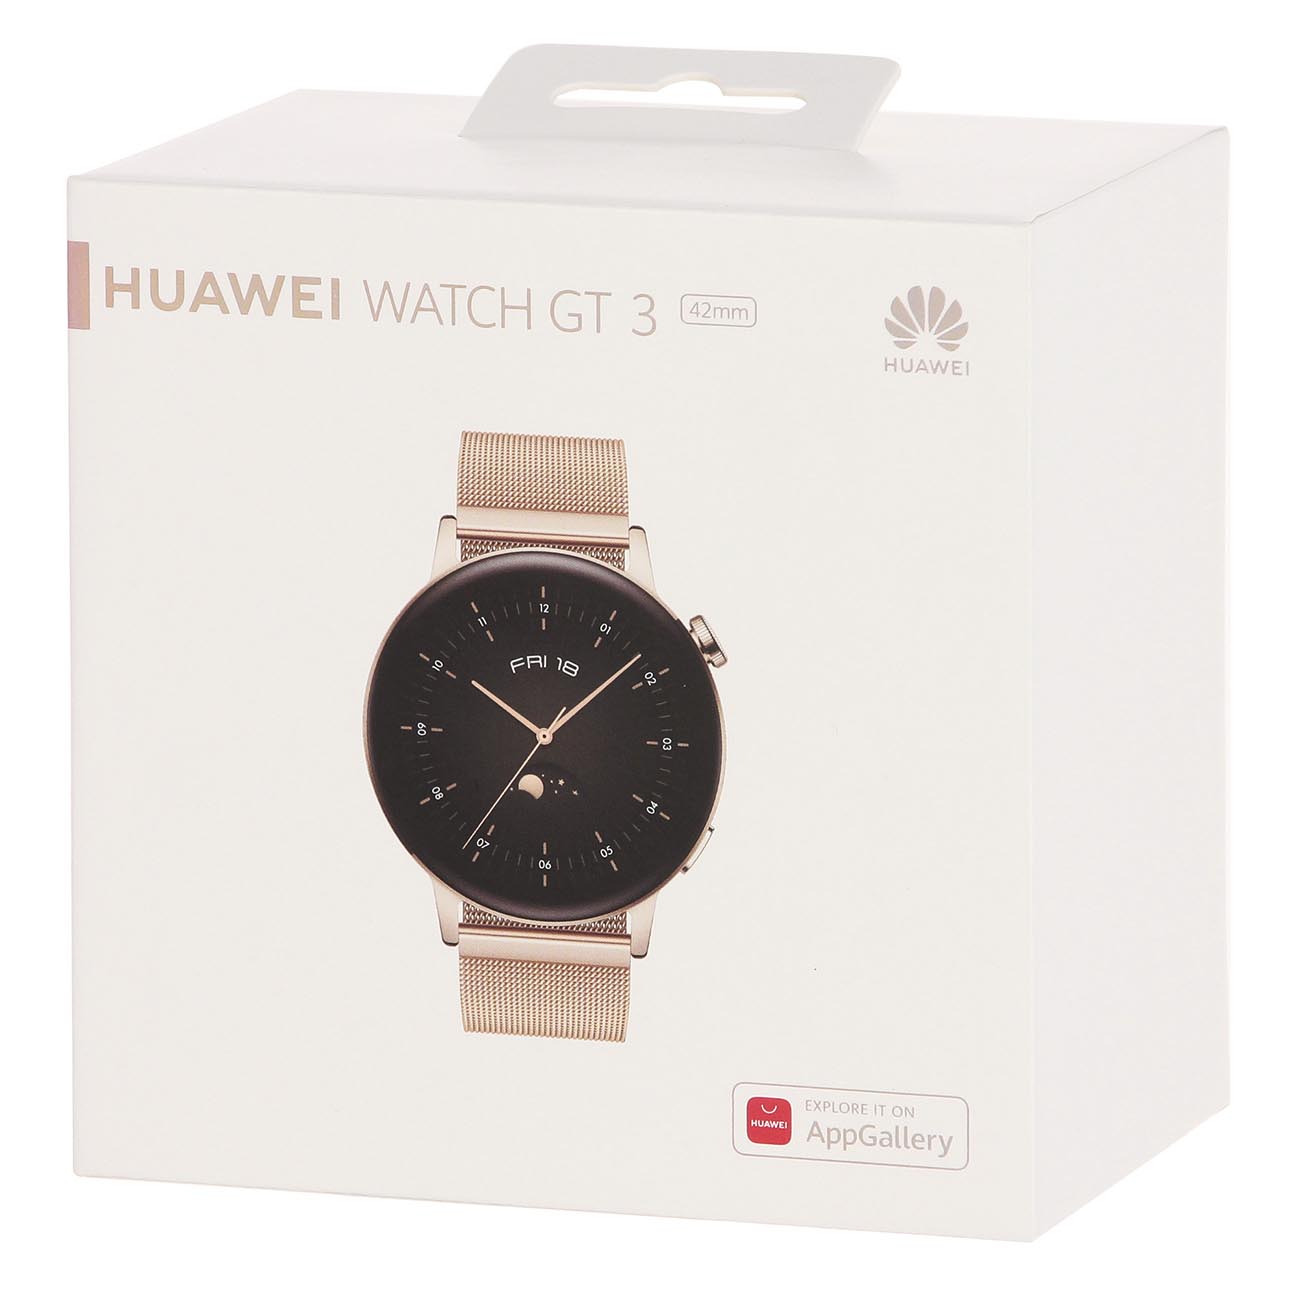 Смарт-часы Huawei gt 3 mil-b19 Gold SS / Gold Milanese (55027168). Смарт-часы Huawei gt 3 mil-b19 Gold SS / White Leather. Huawei gt 3 mil-b19 Gold SS / Gold Milanese. Смарт-часы Huawei gt 3 mil-b19 Gold SS / Gold Milanese отзывы.